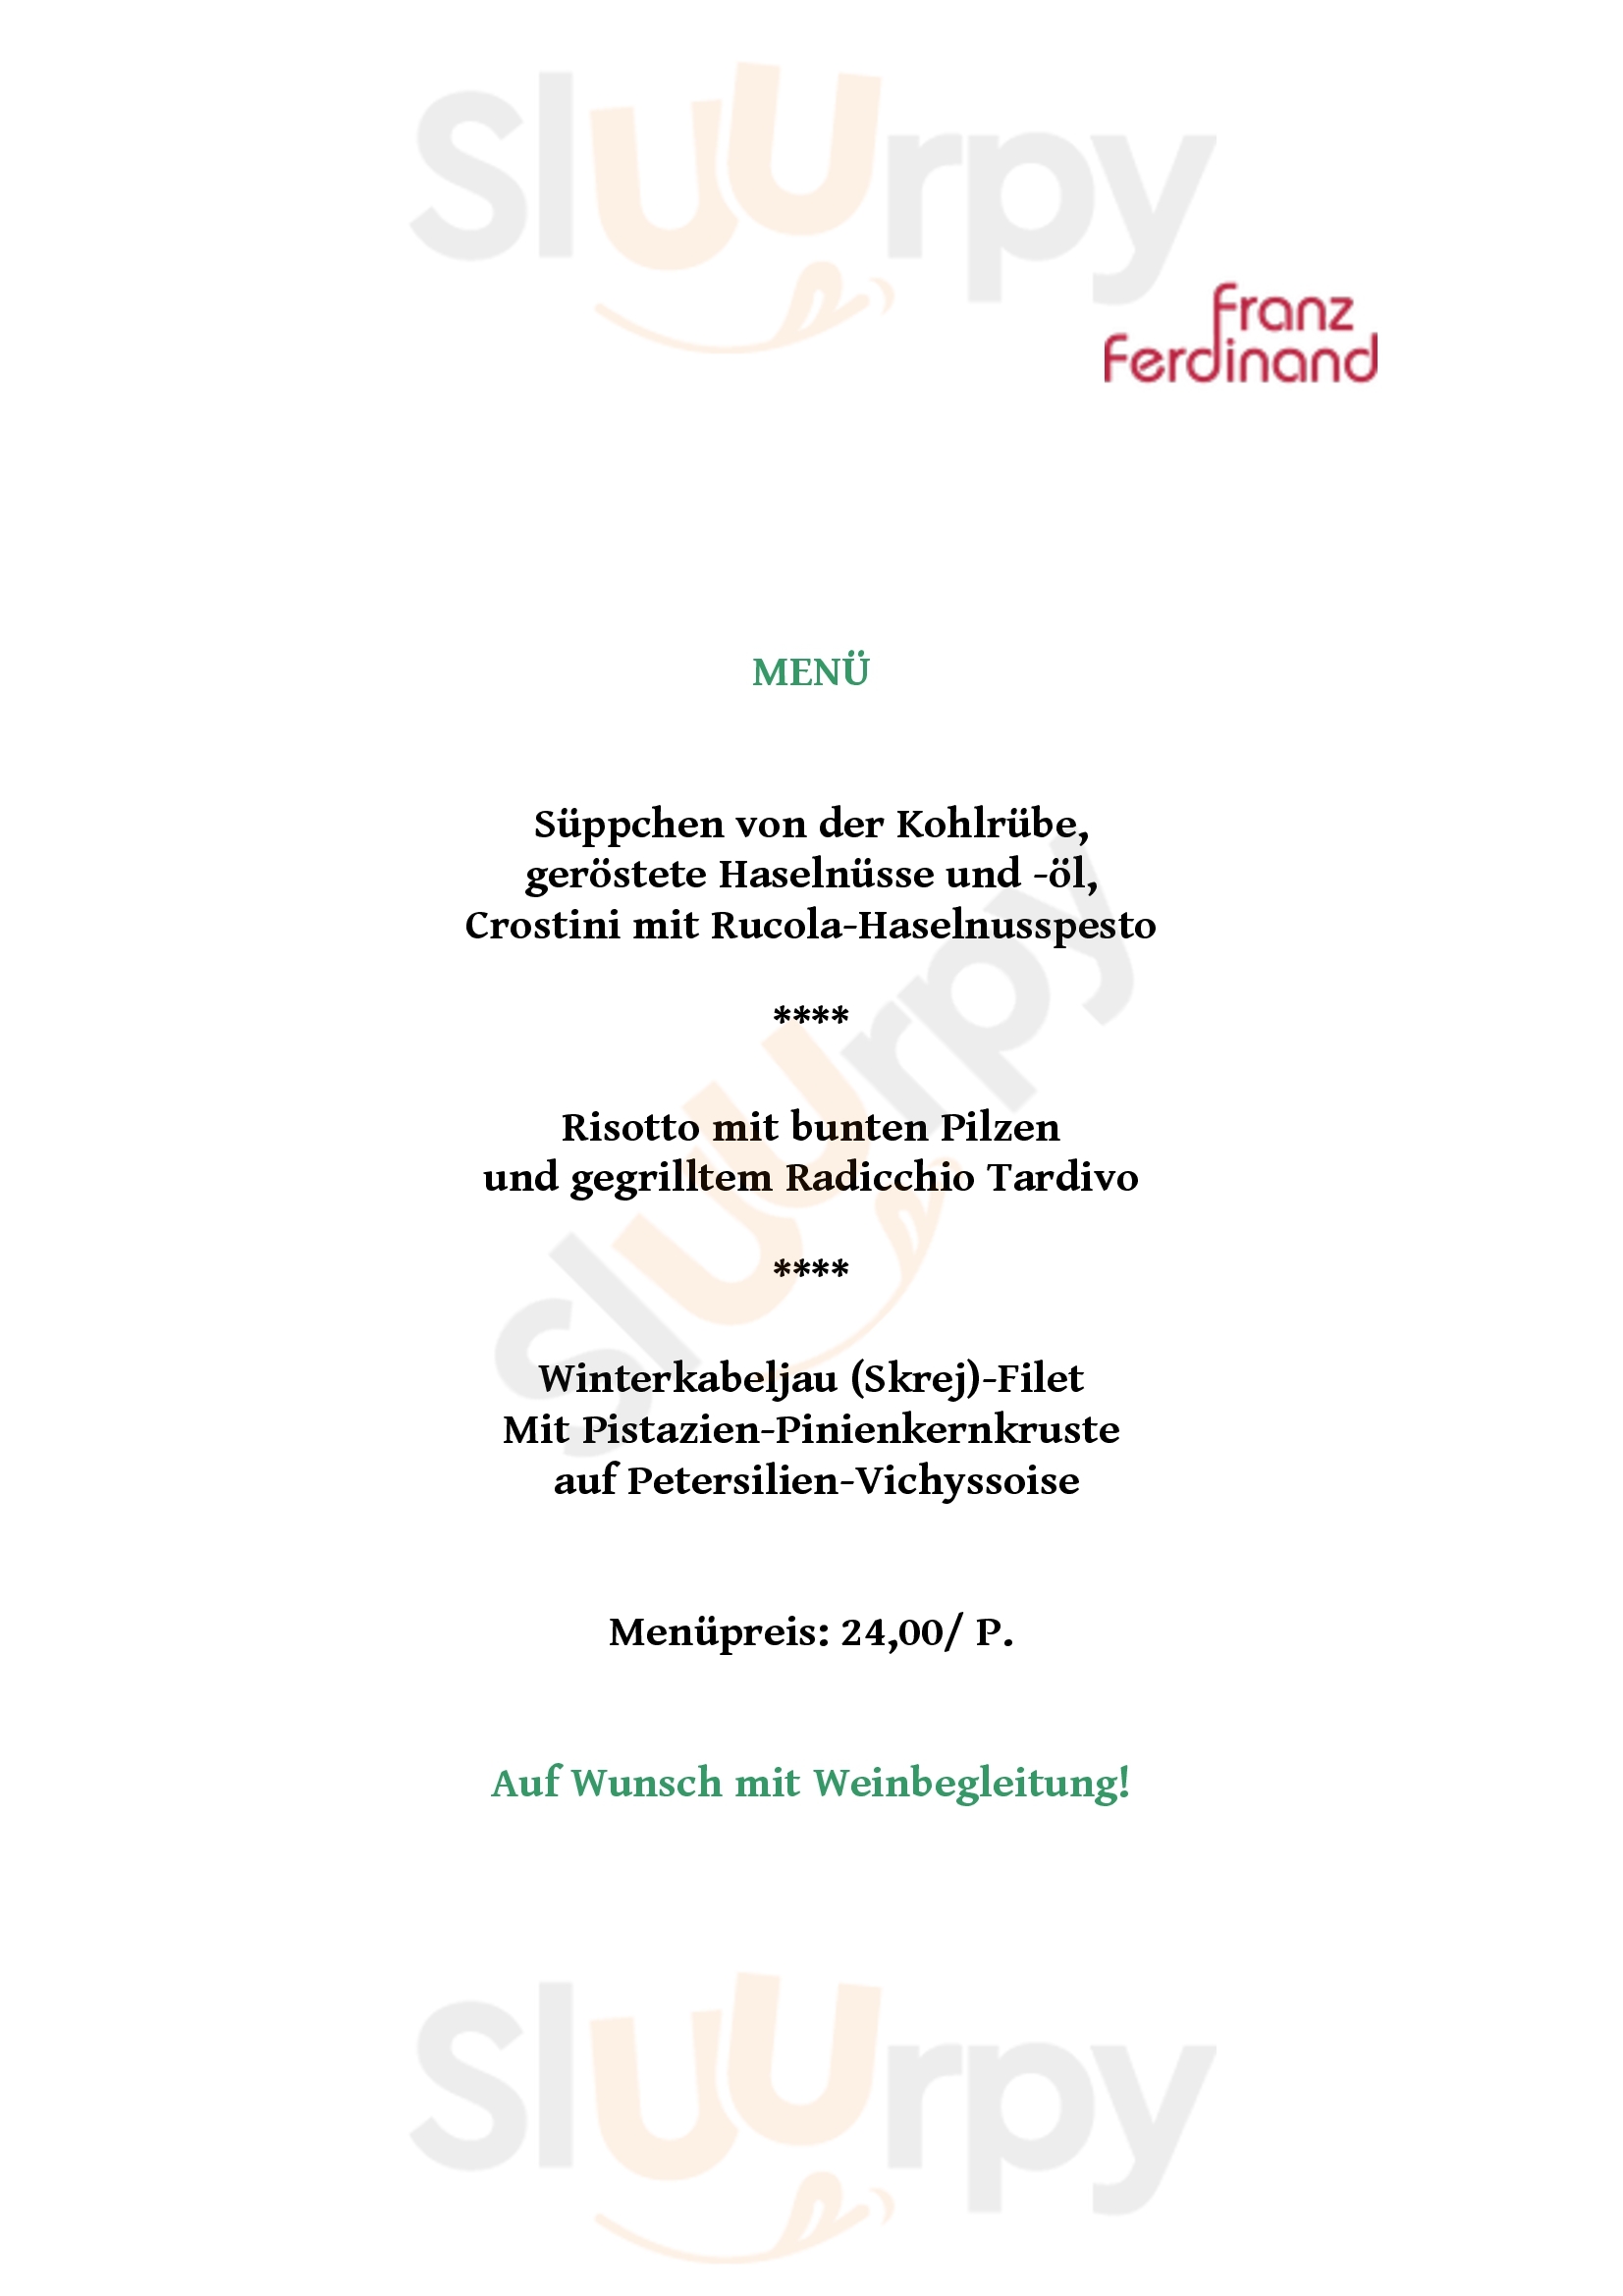 Franz Ferdinand Bar Steyr Menu - 1